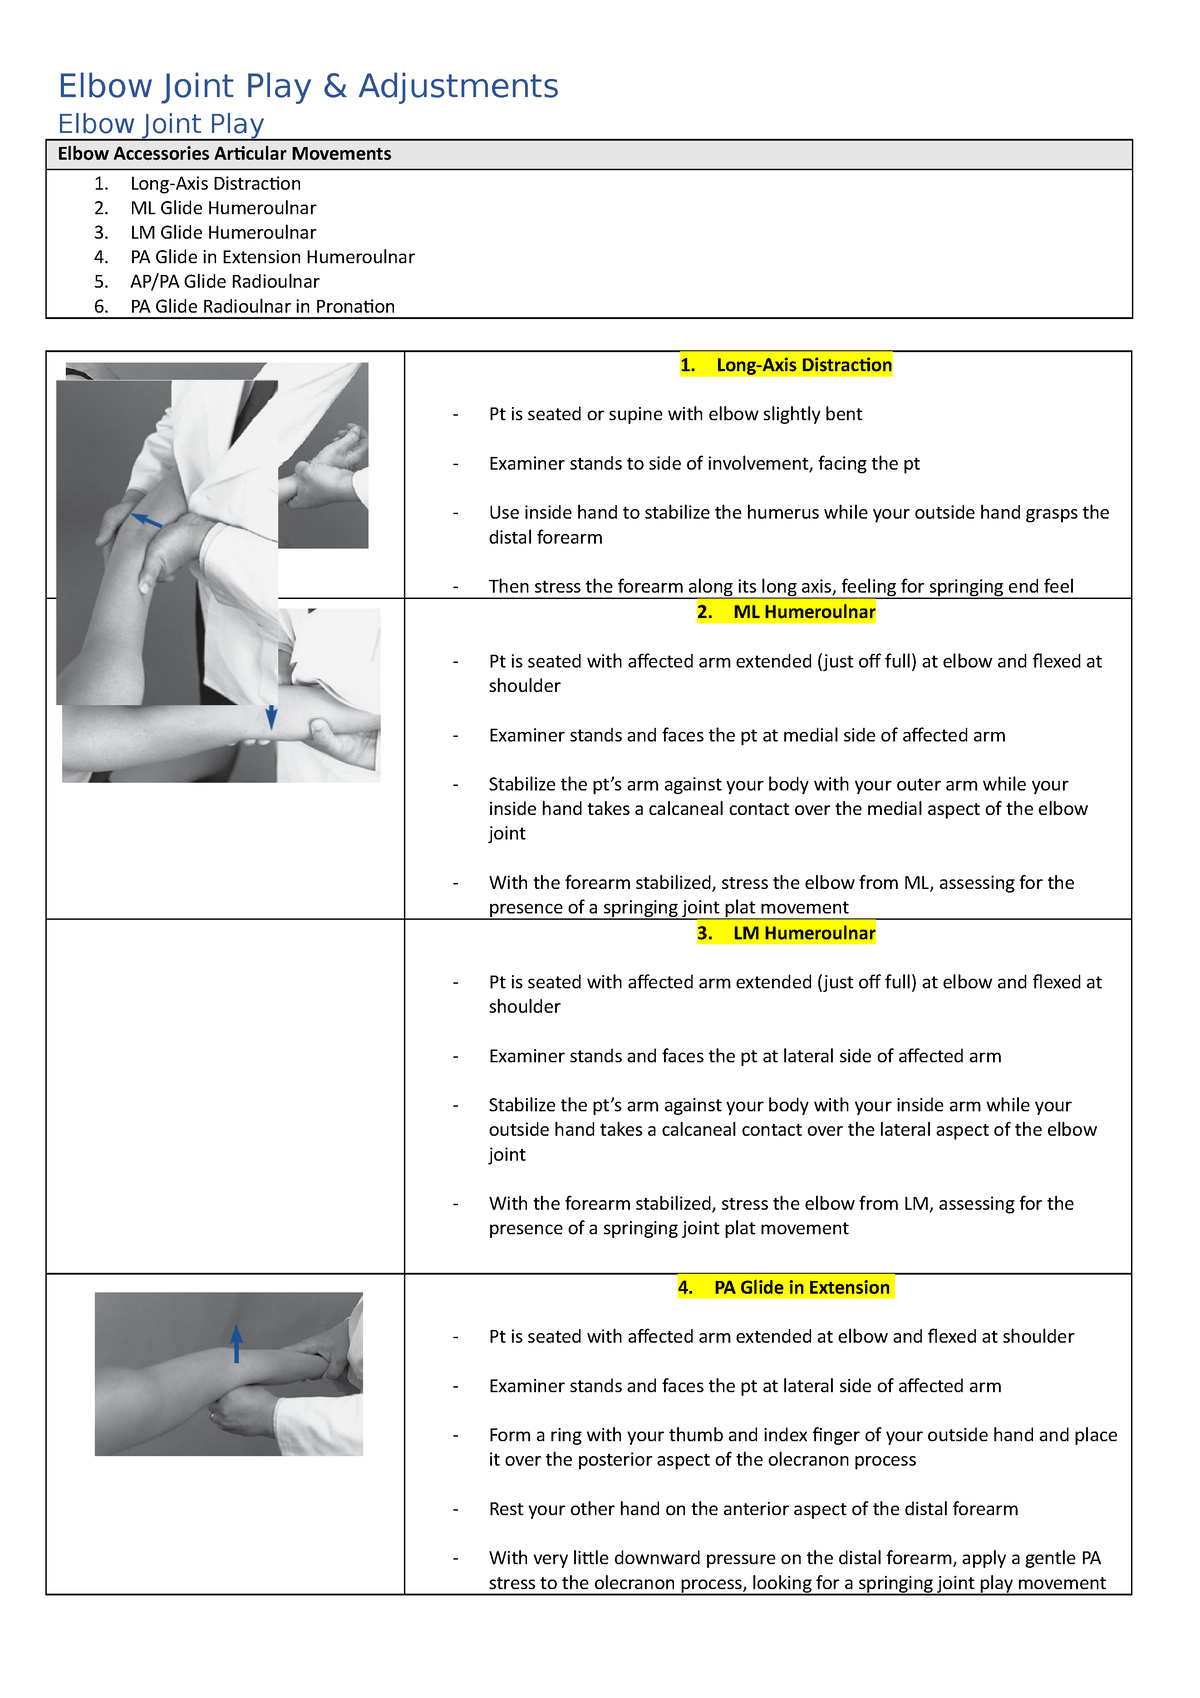 Elbow Joint Play & Adjustments - CHI338 - Murdoch - Studocu